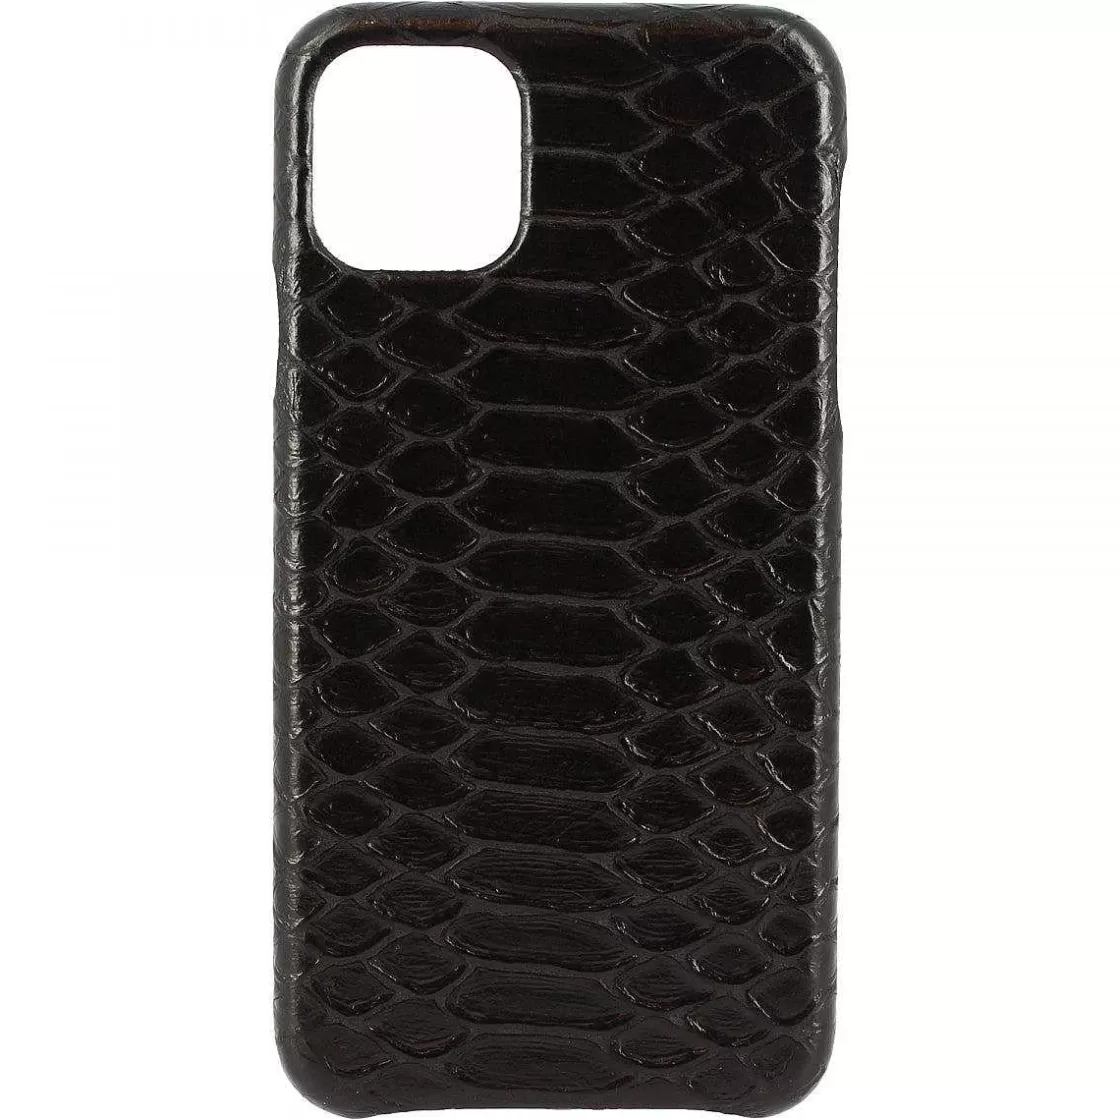 Leonardo Iphone Cover In Black Python Printed Leather Sale